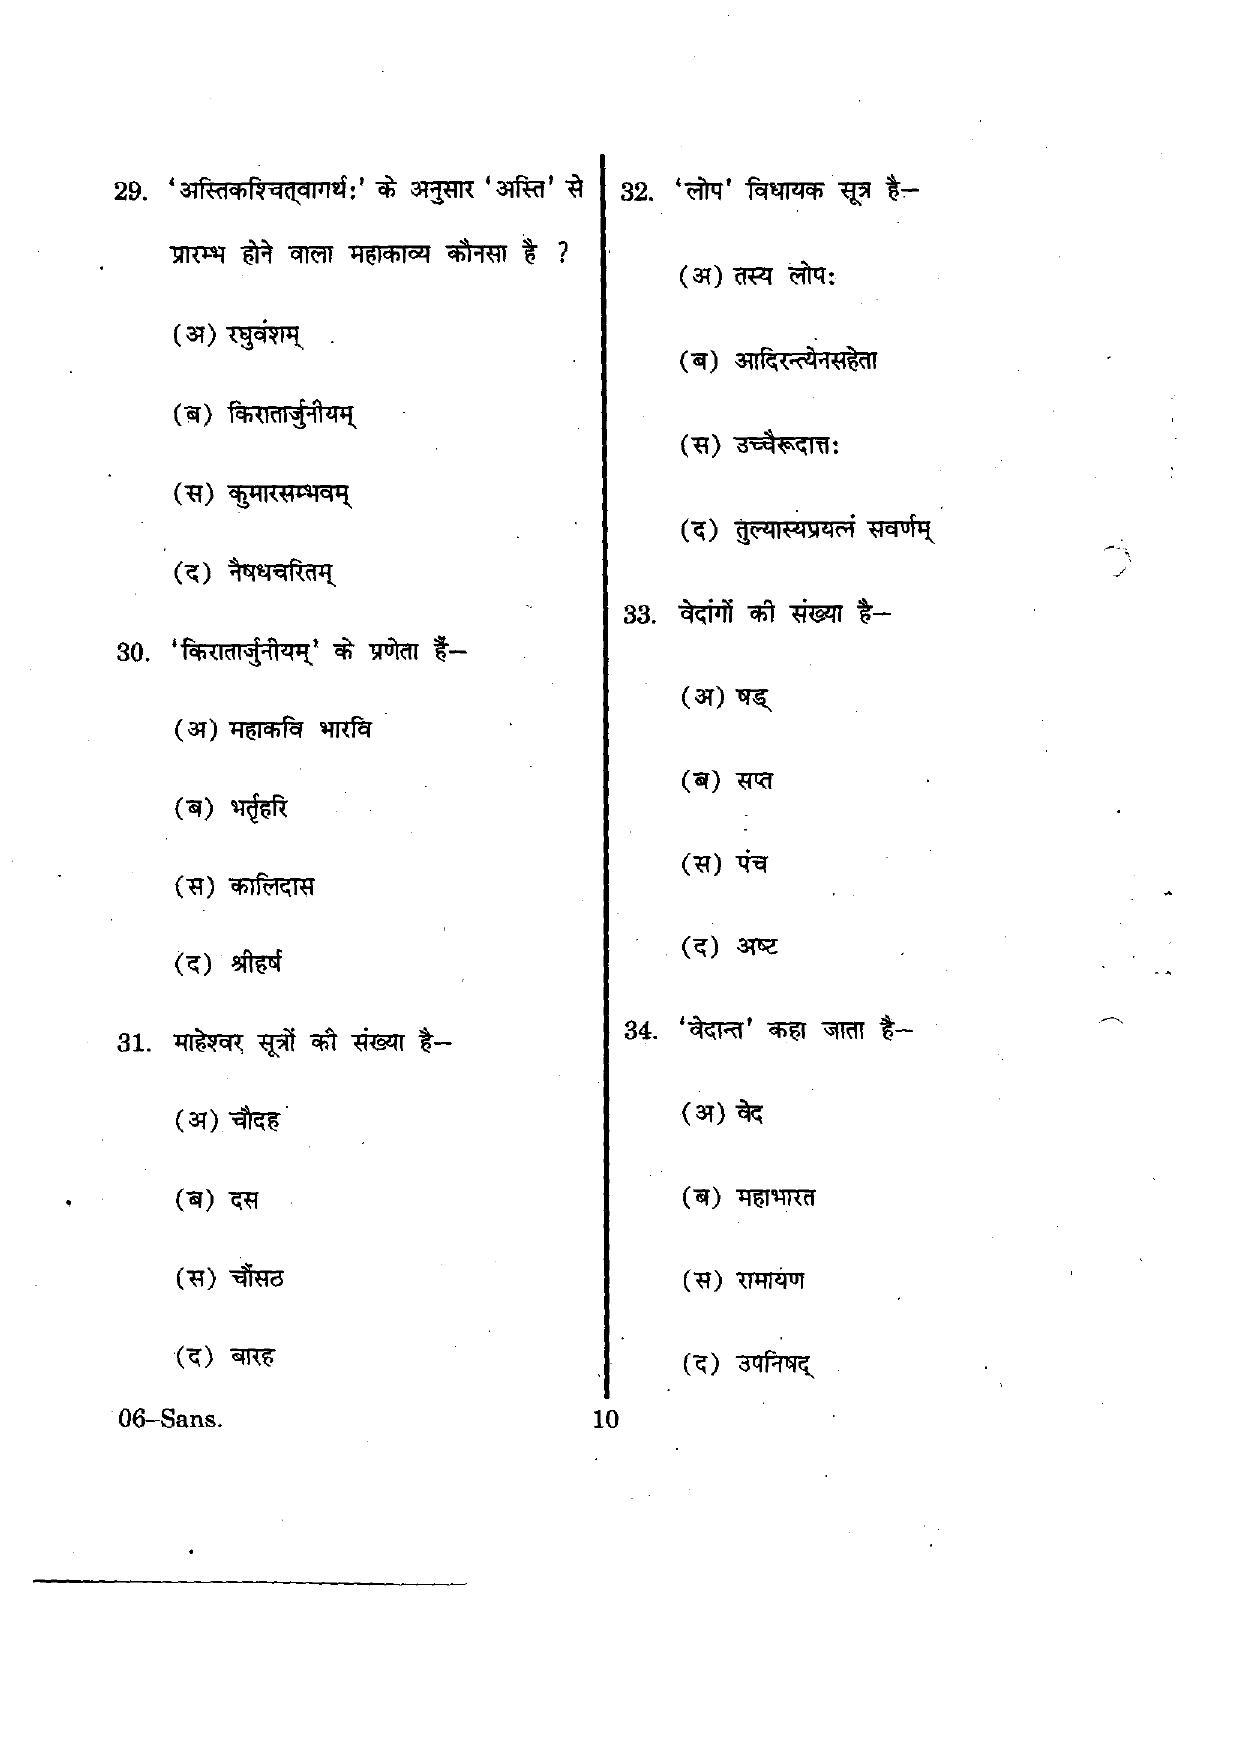 URATPG Sanskrit 2012 Question Paper - Page 10